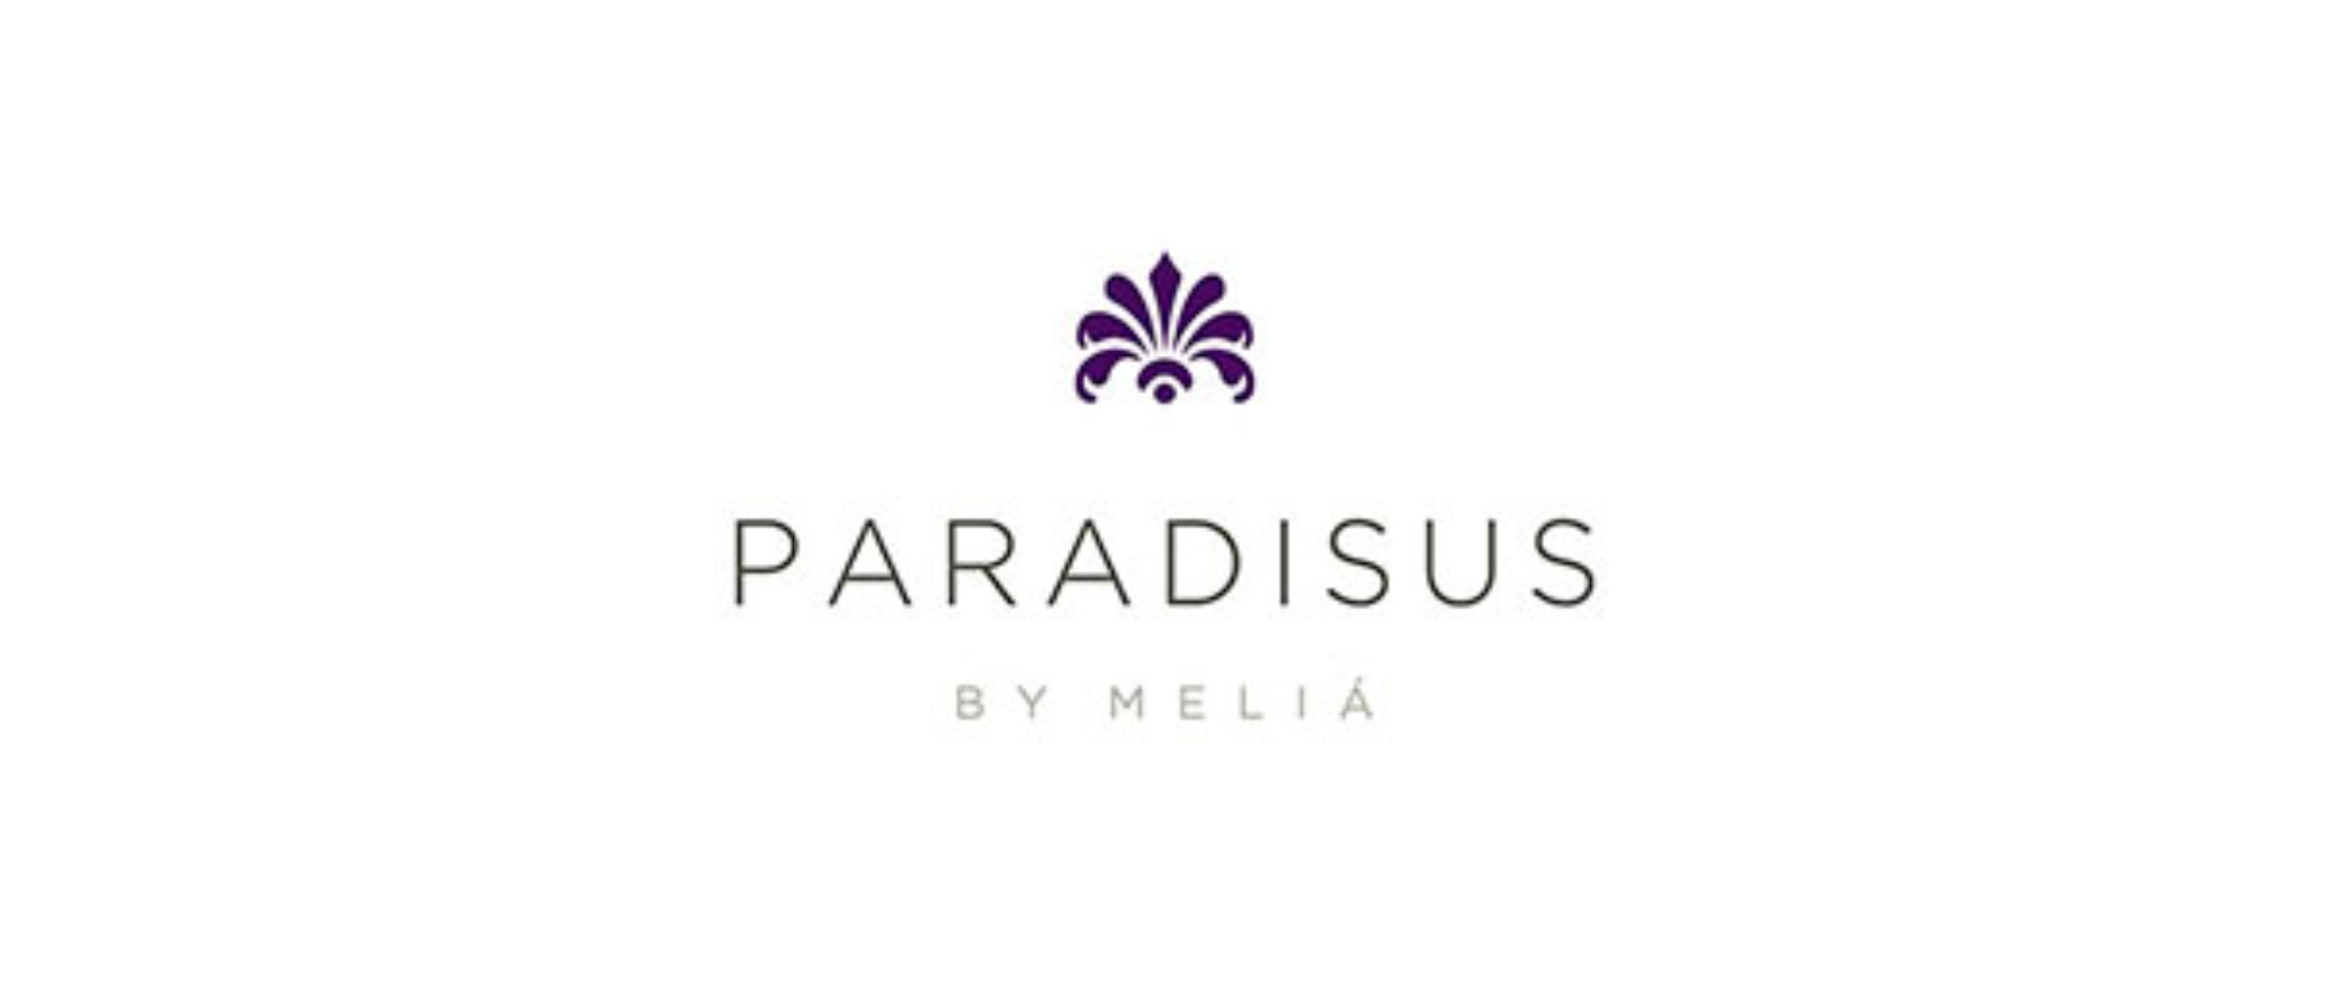 Paradisus Melia Hotels